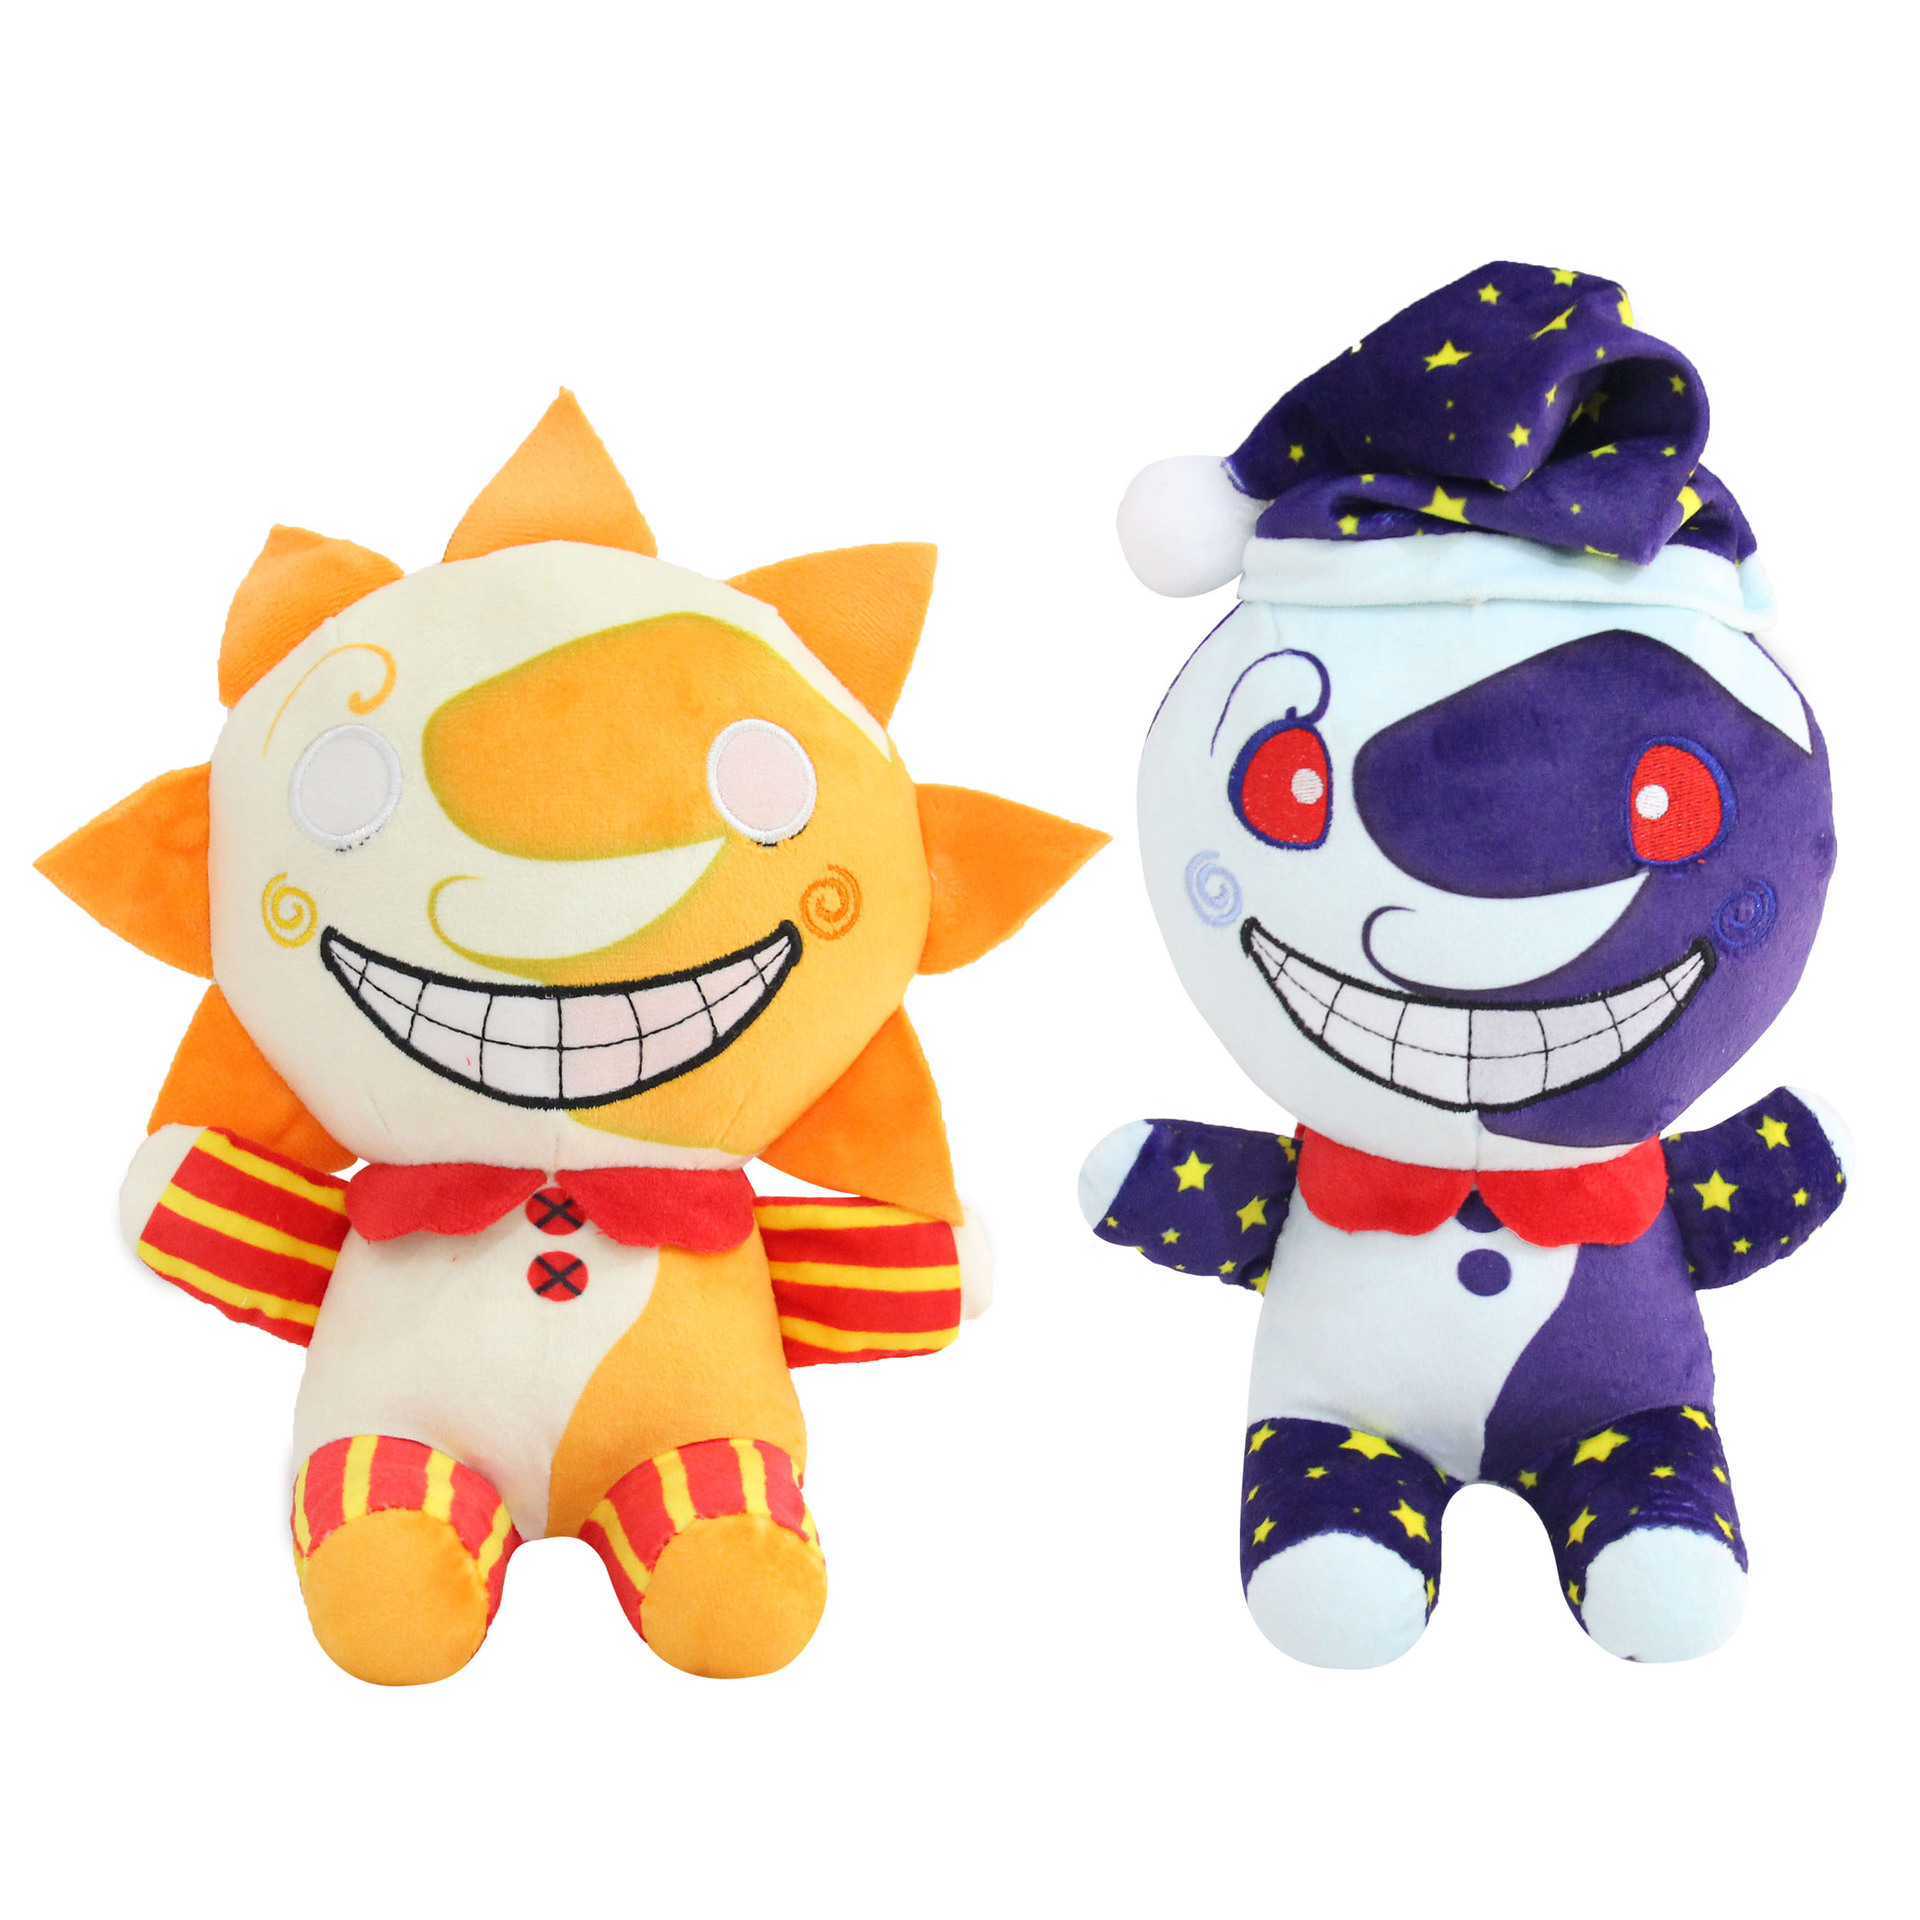 NUOVO FNAF Sundrop Bolls Bolls Toys Breach Sicurezza Sunrise FNAF Boss Sun Moon Joker Game Doll Gift